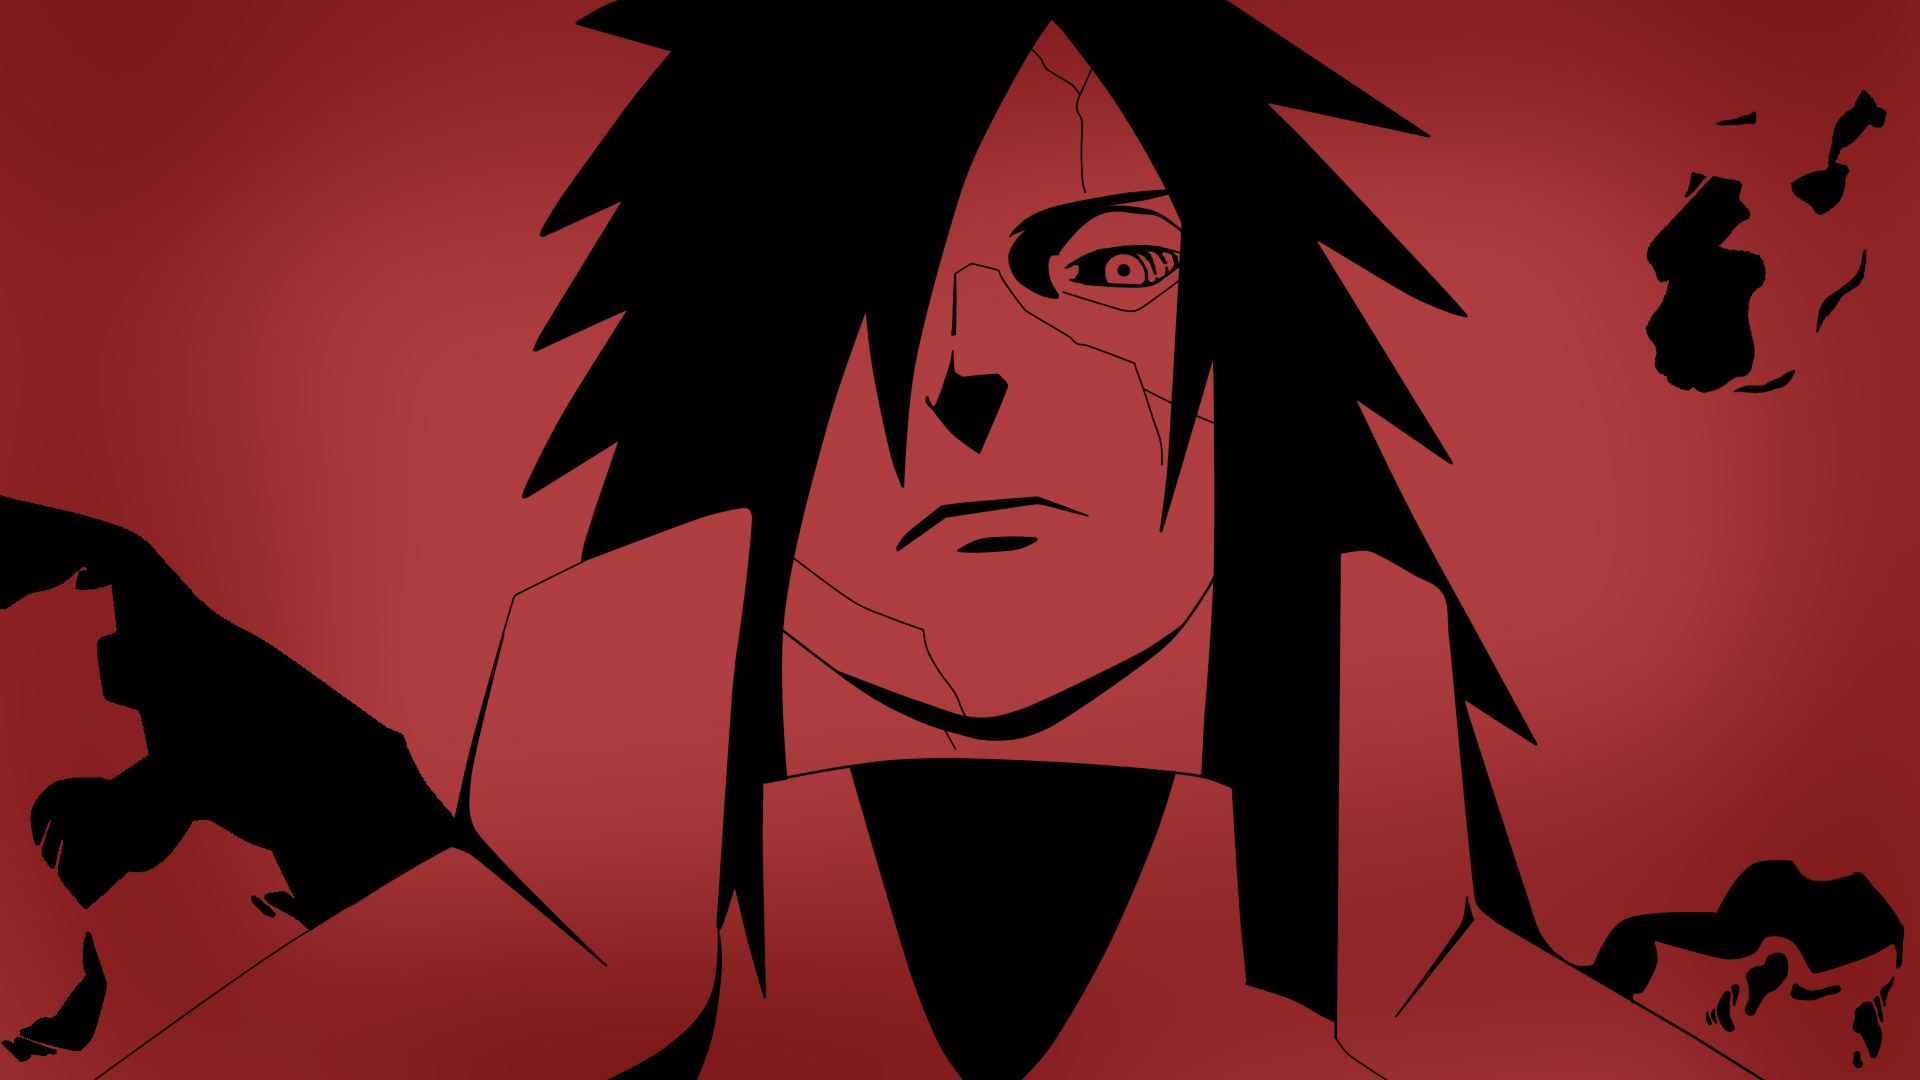 Anime 1920x1080 Naruto Shippuden Uchiha Madara Rinnegan anime red background simple background gradient face anime men